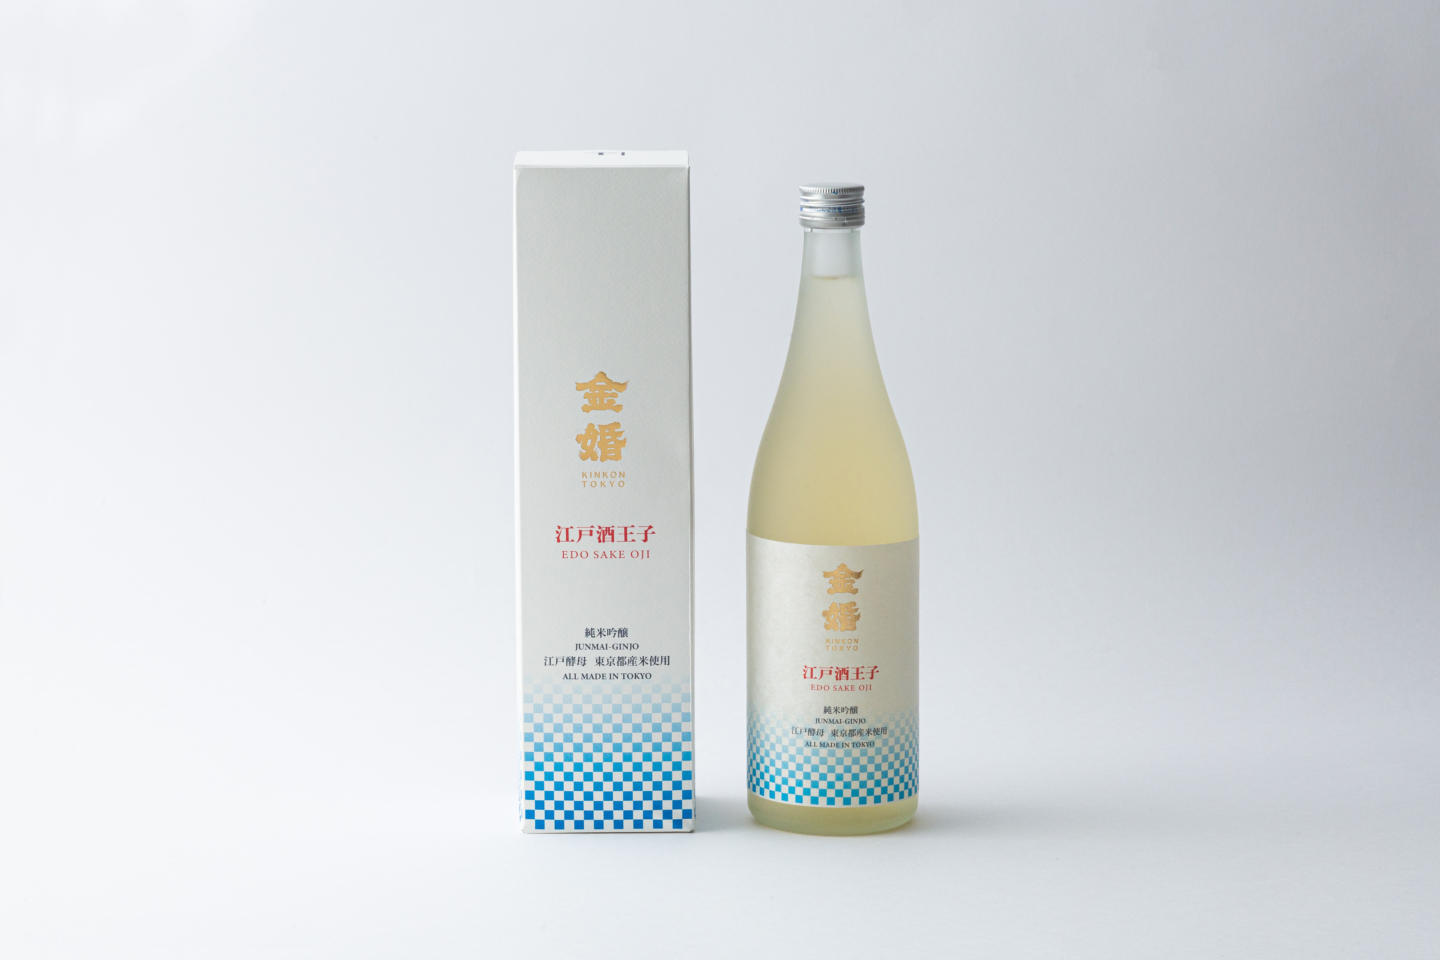 【Toshimaya】<i>Tokyo Premium Sparkling Sake -Shin-</i>: portez un toast avec un saké mousseux produit à Tokyo !